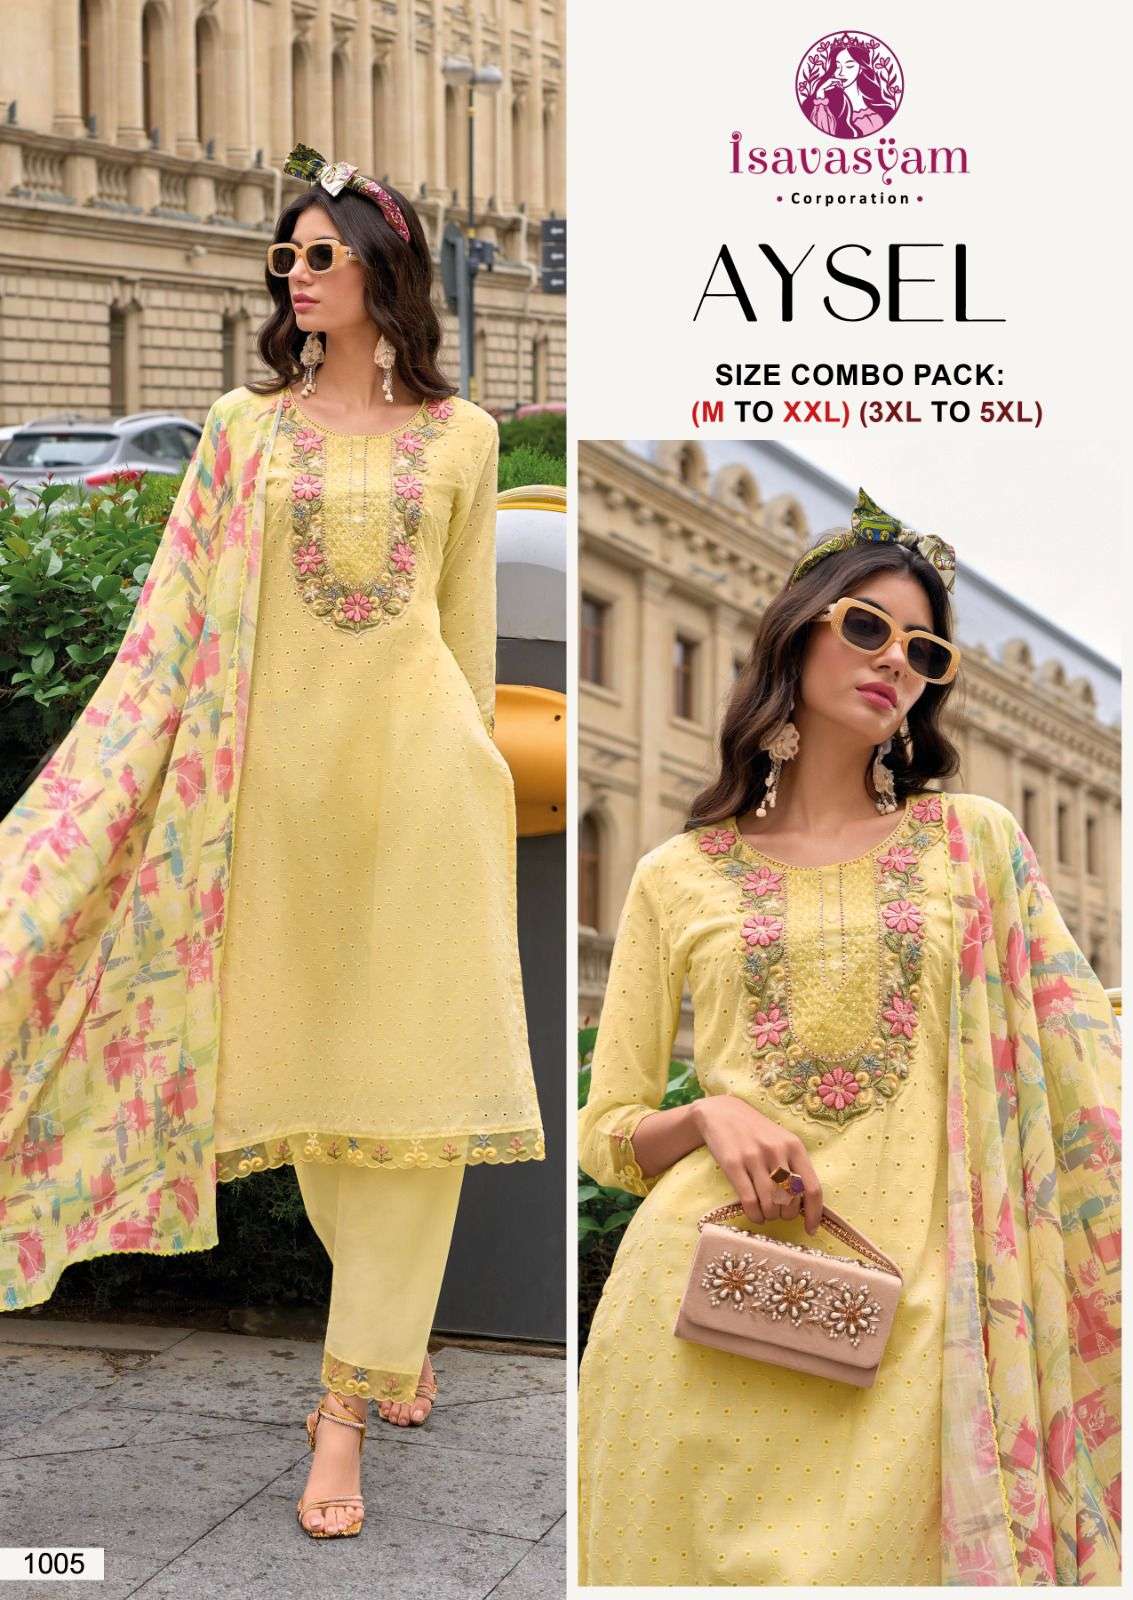 isavasyam corporation aysel 1005 design stylish look cotton salwar suits readymade collection surat gujarat 